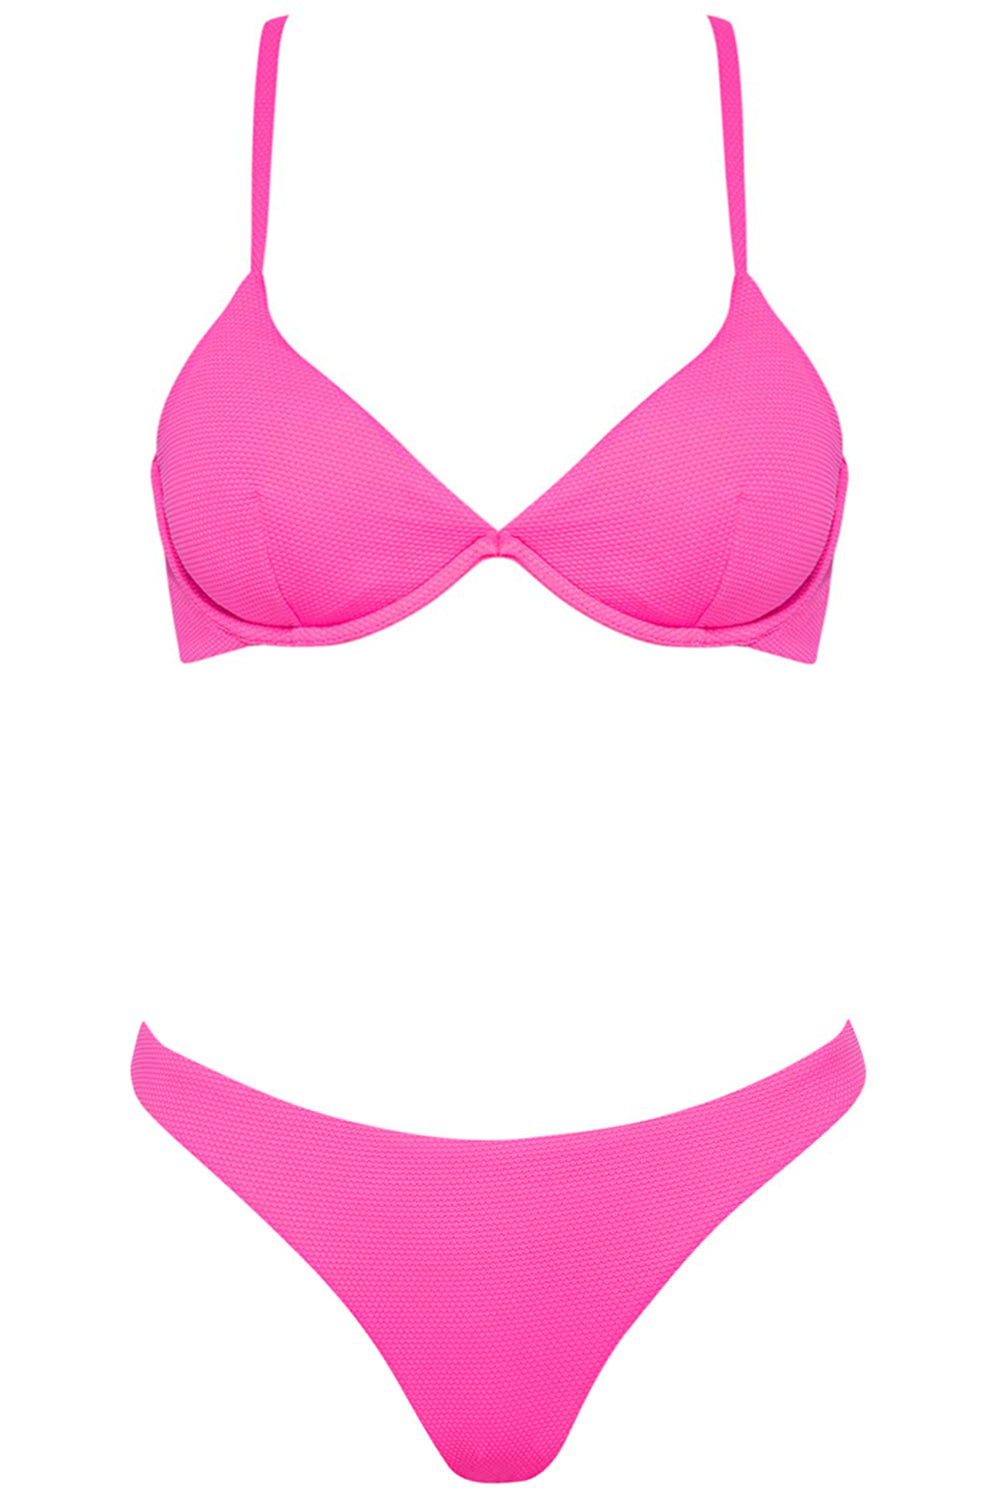 Portofino Bikini Pink Set on white background front view.